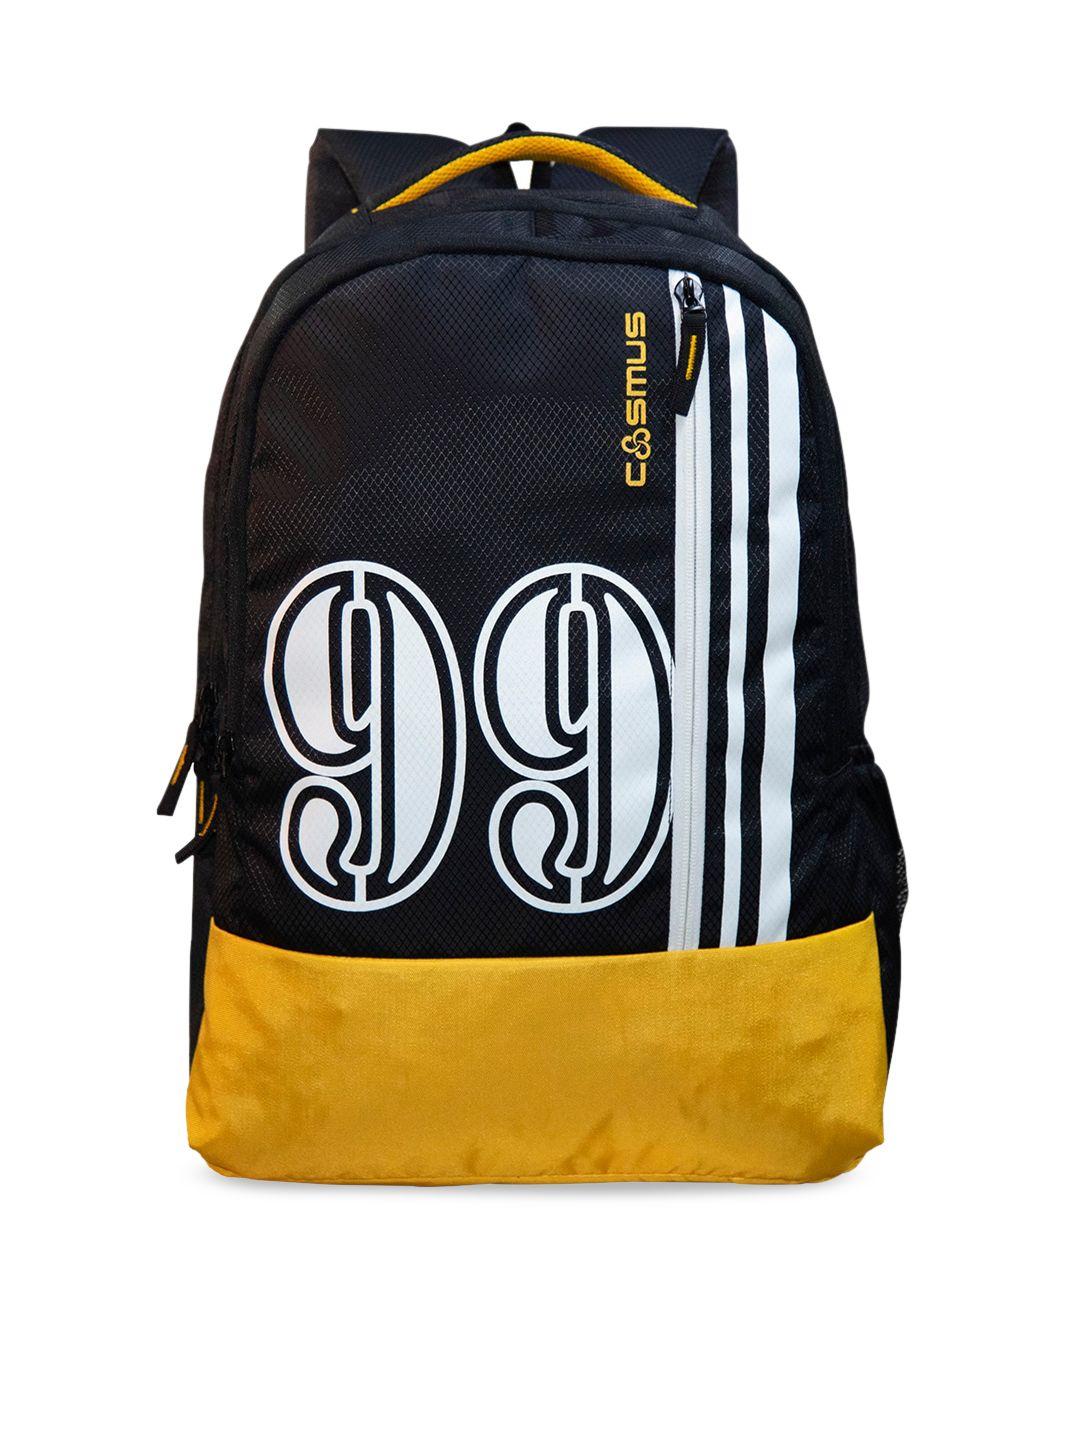 cosmus unisex black & yellow printed backpack